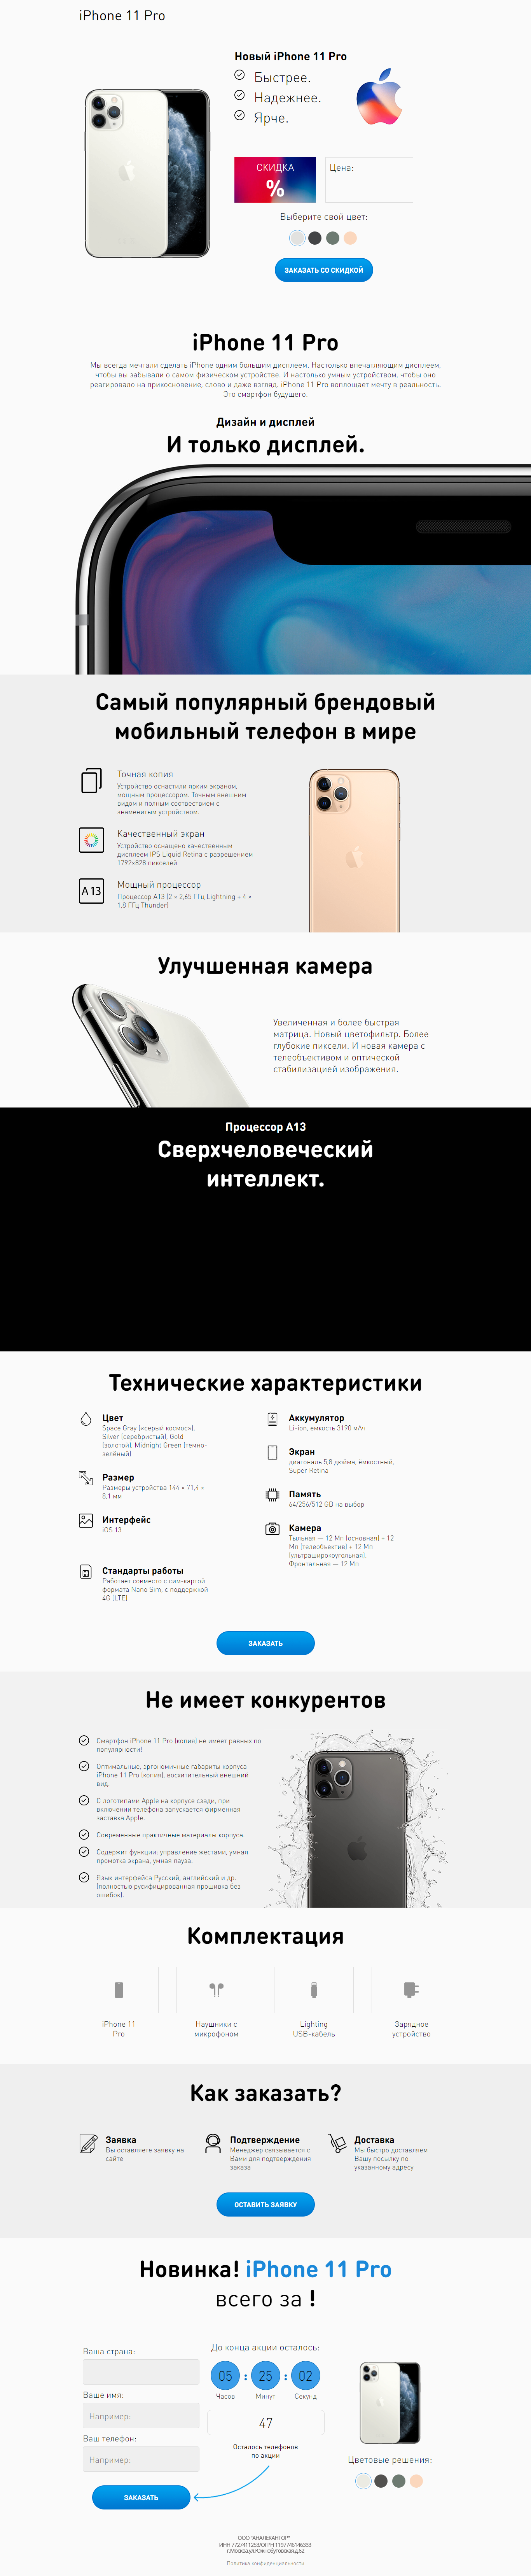 Шаблон лендинга: Новый iPhone 11 PRO